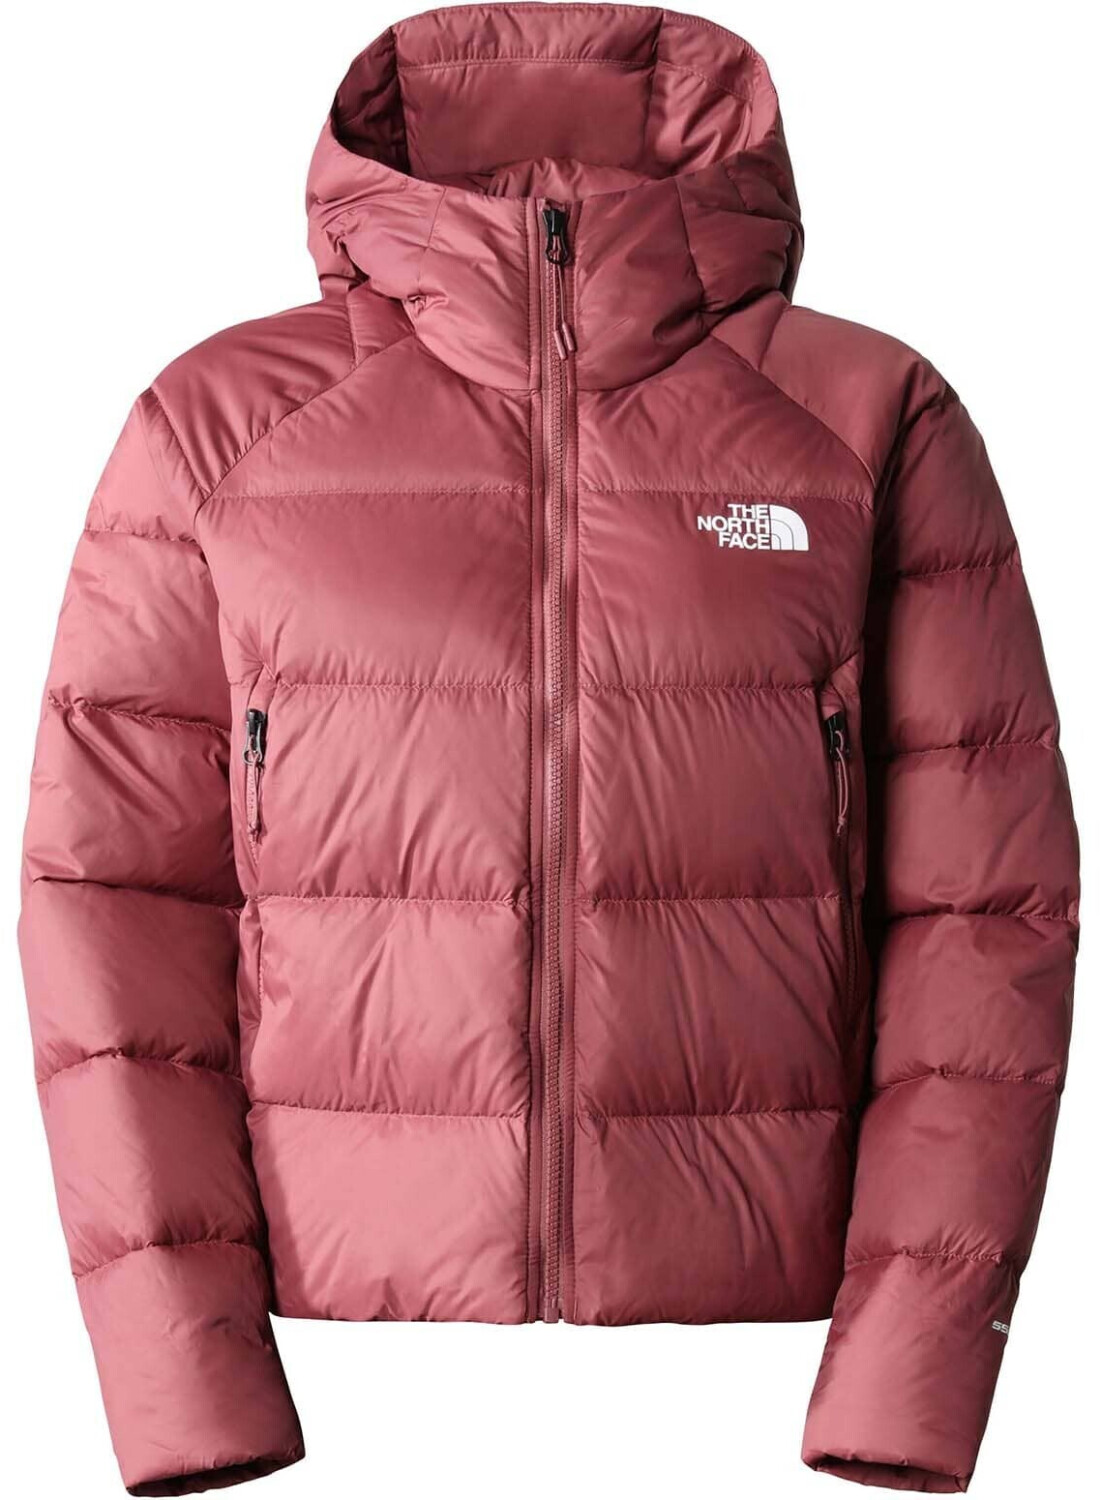 The North Face Women's Hyalite Down Hooded Jacket wild ginger ab 237,23 € |  Preisvergleich bei